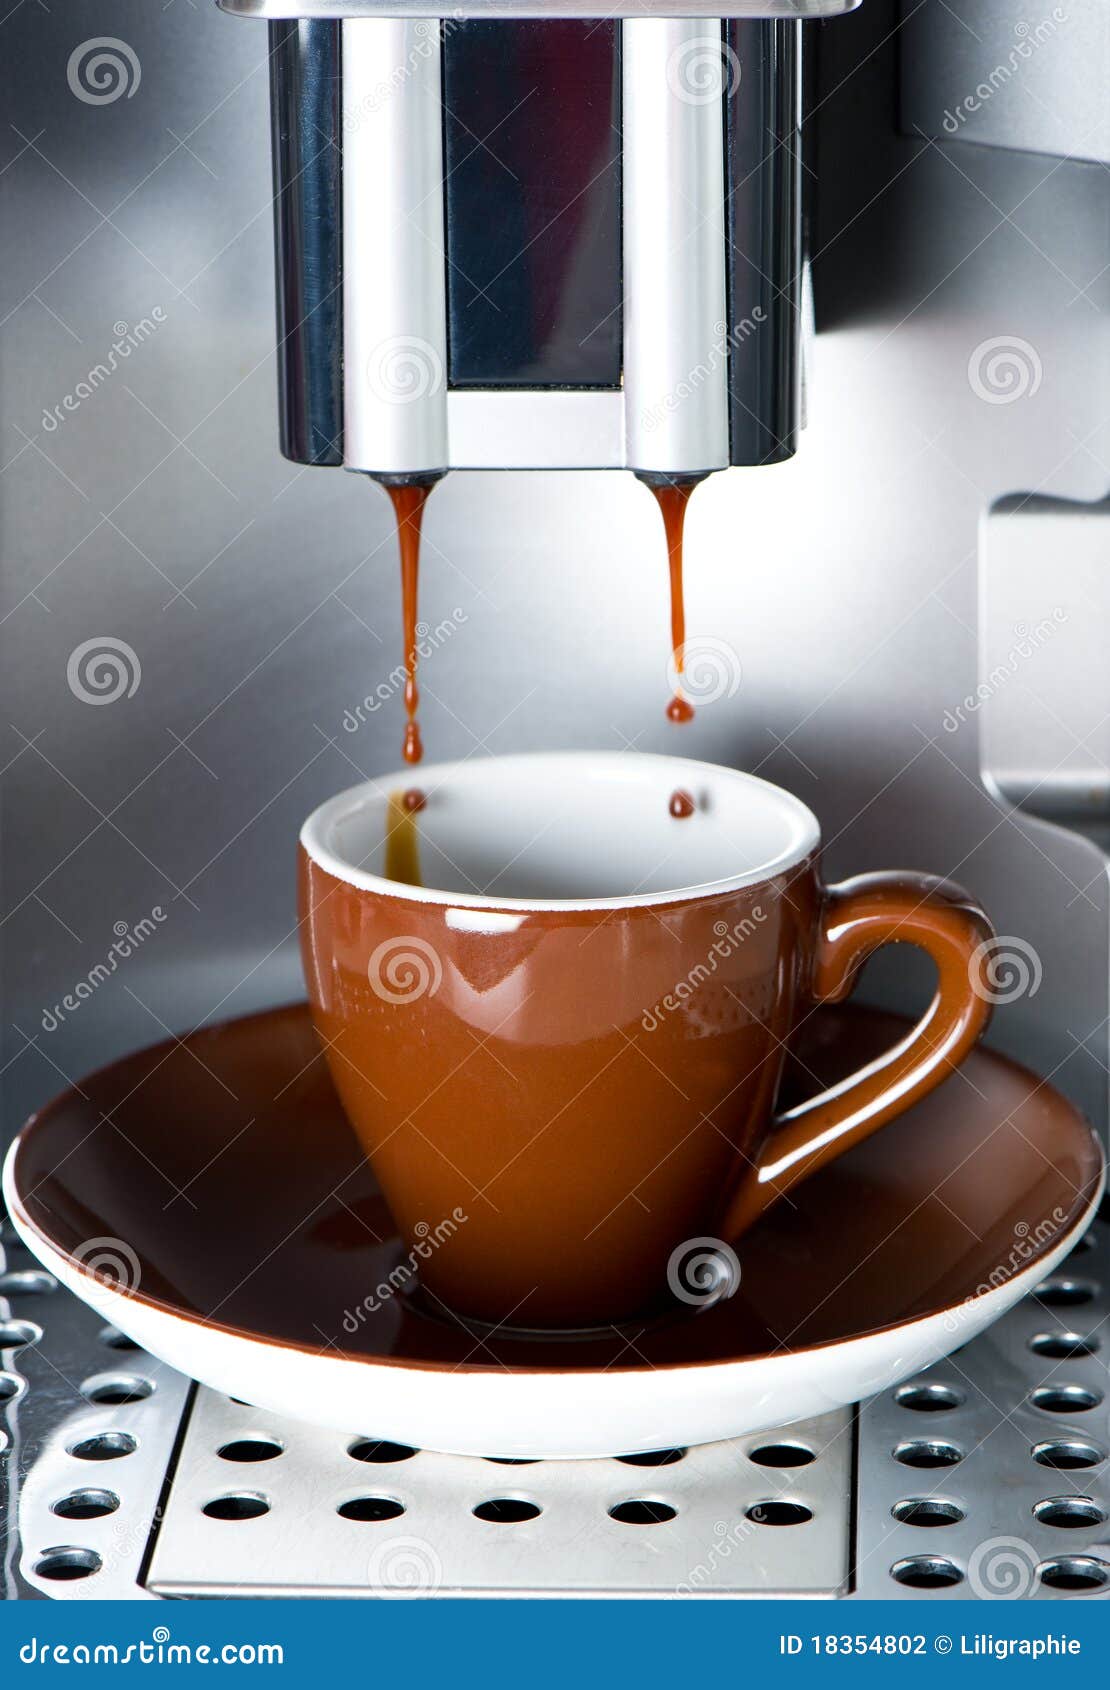 coffee maker pouring fresh espresso coffee